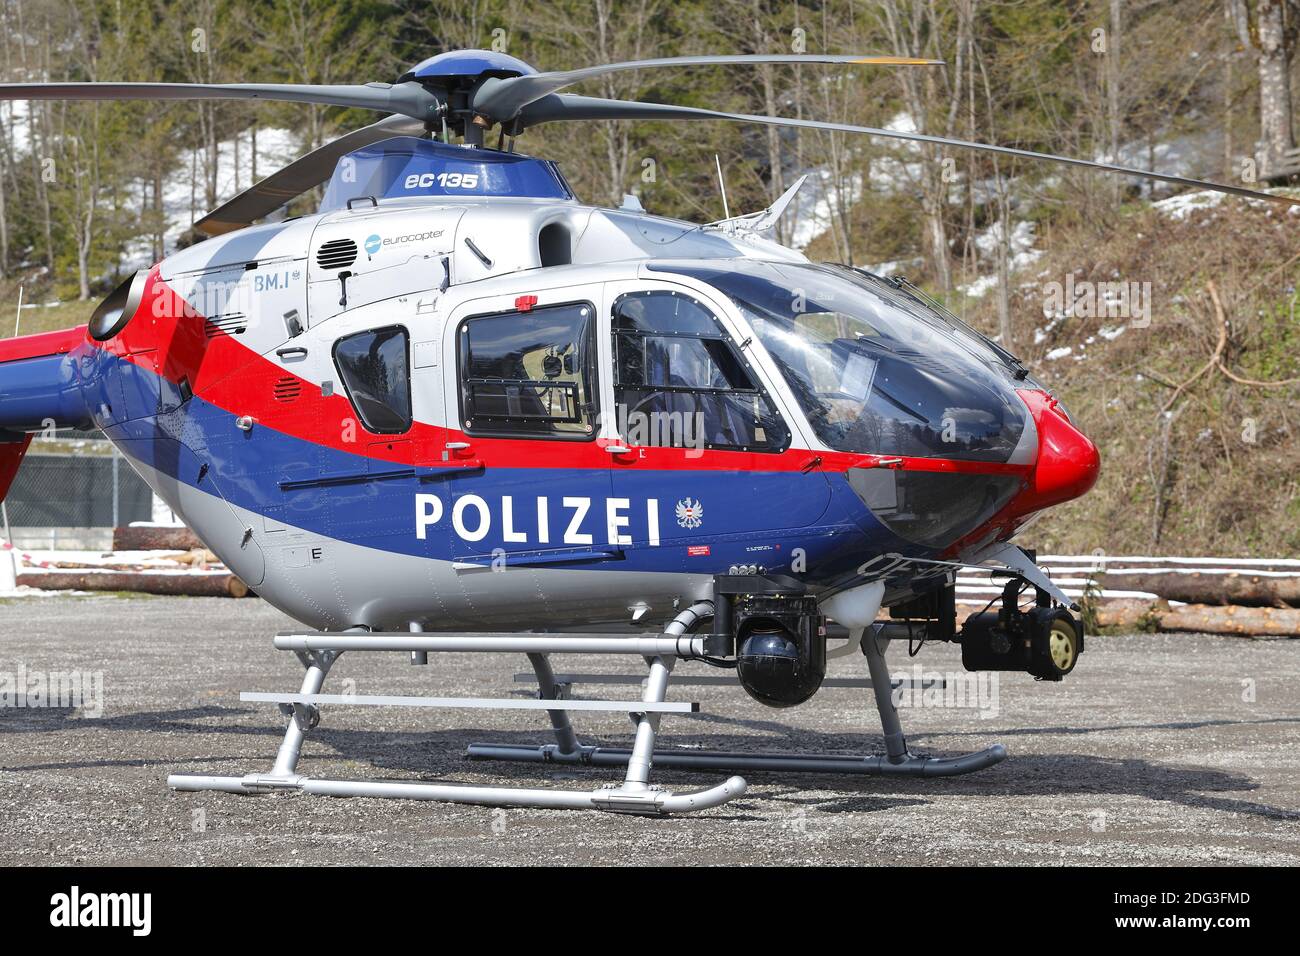 Police Helicopter Thermal Imaging Camera Stockfotos und -bilder Kaufen -  Alamy